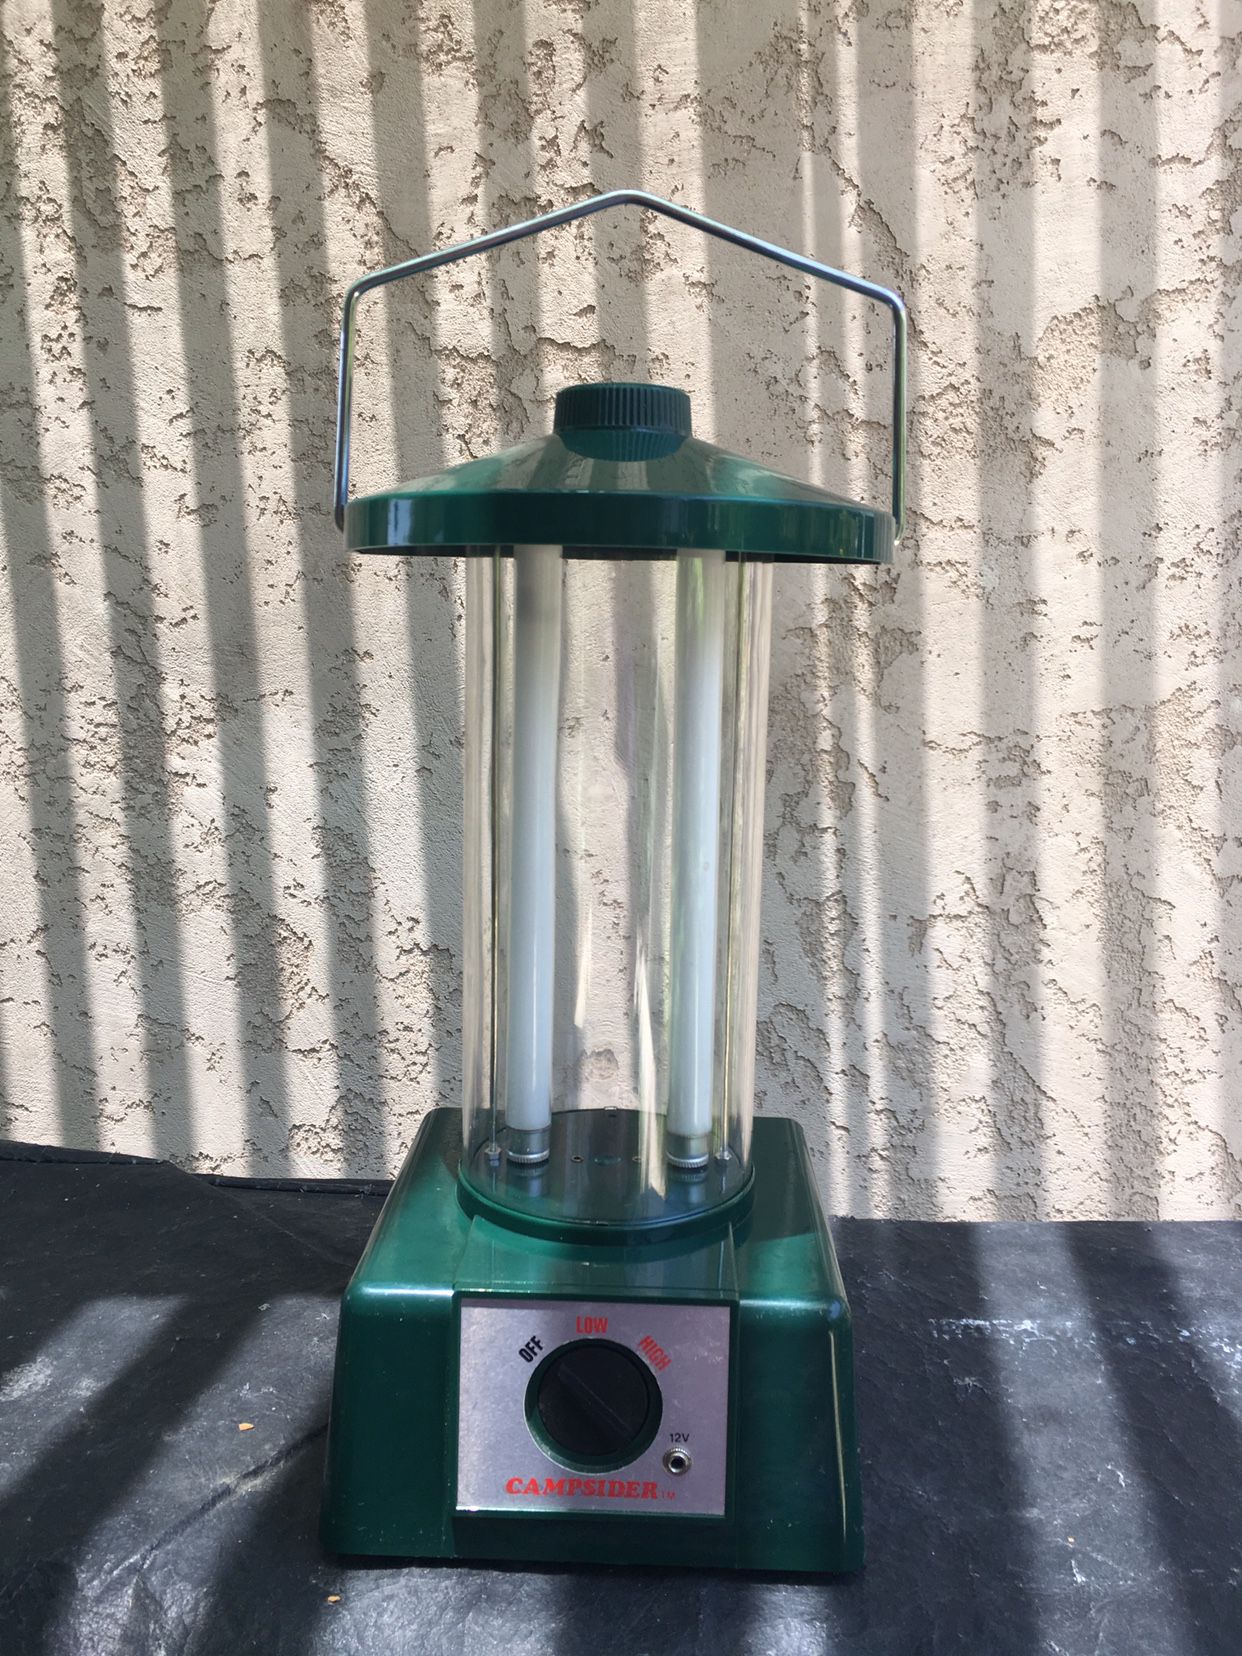 Duracell 1000 Lumen Lantern 2 Pack for Sale in Fallbrook, CA - OfferUp